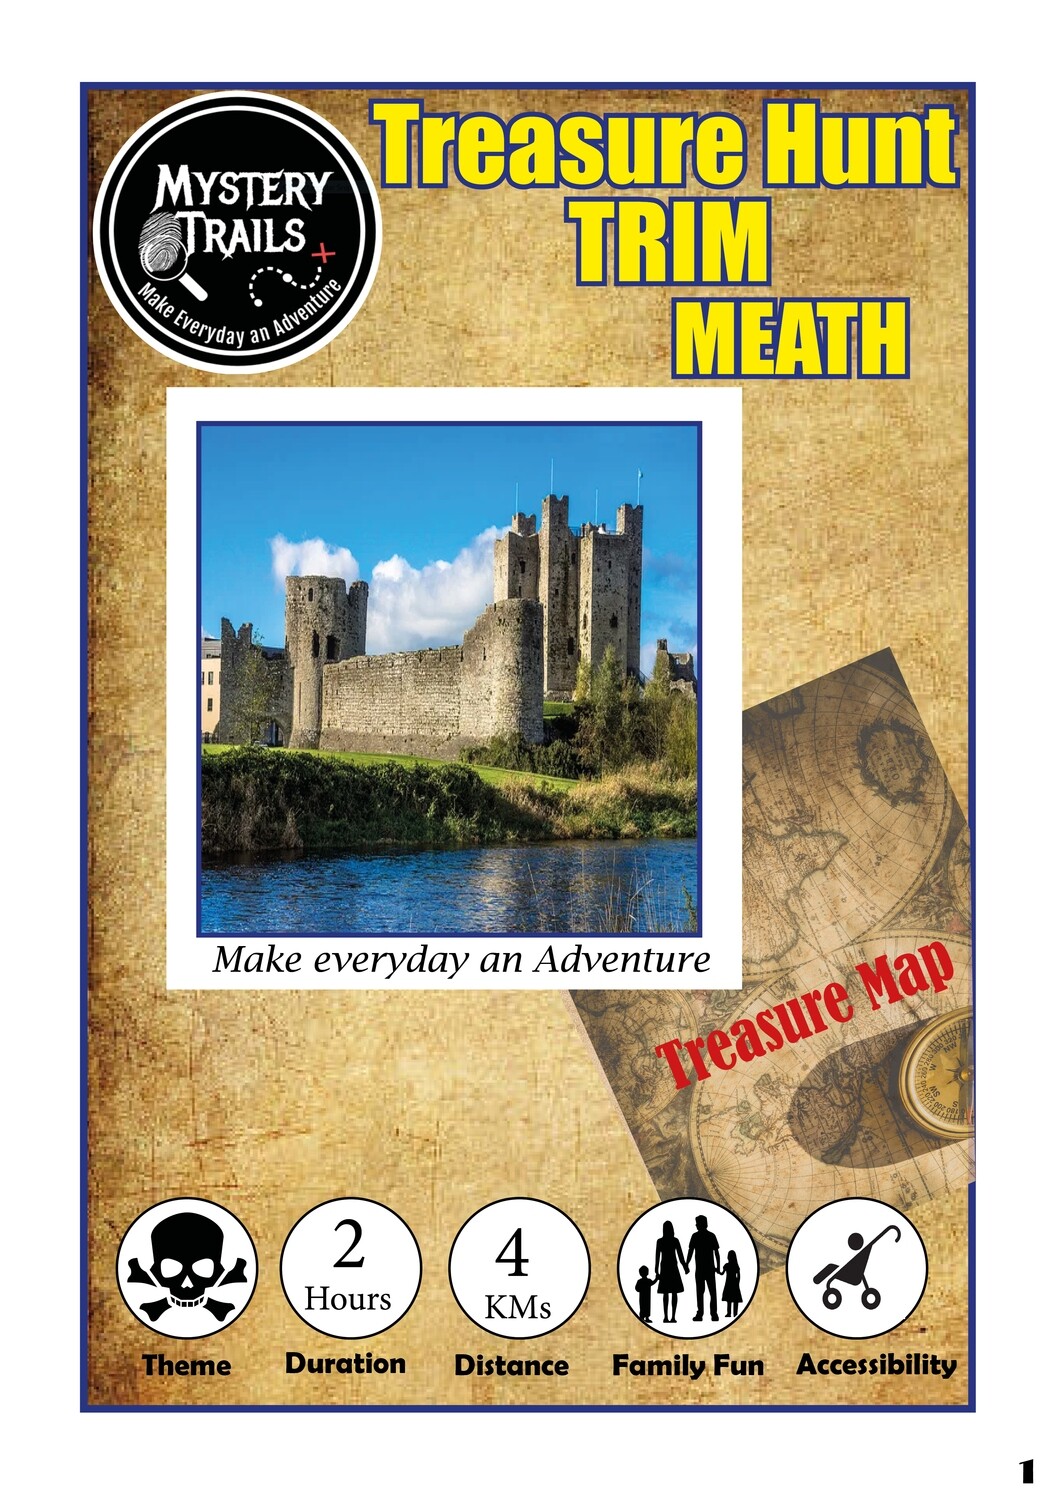 Trim- Treasure Hunt-Meath